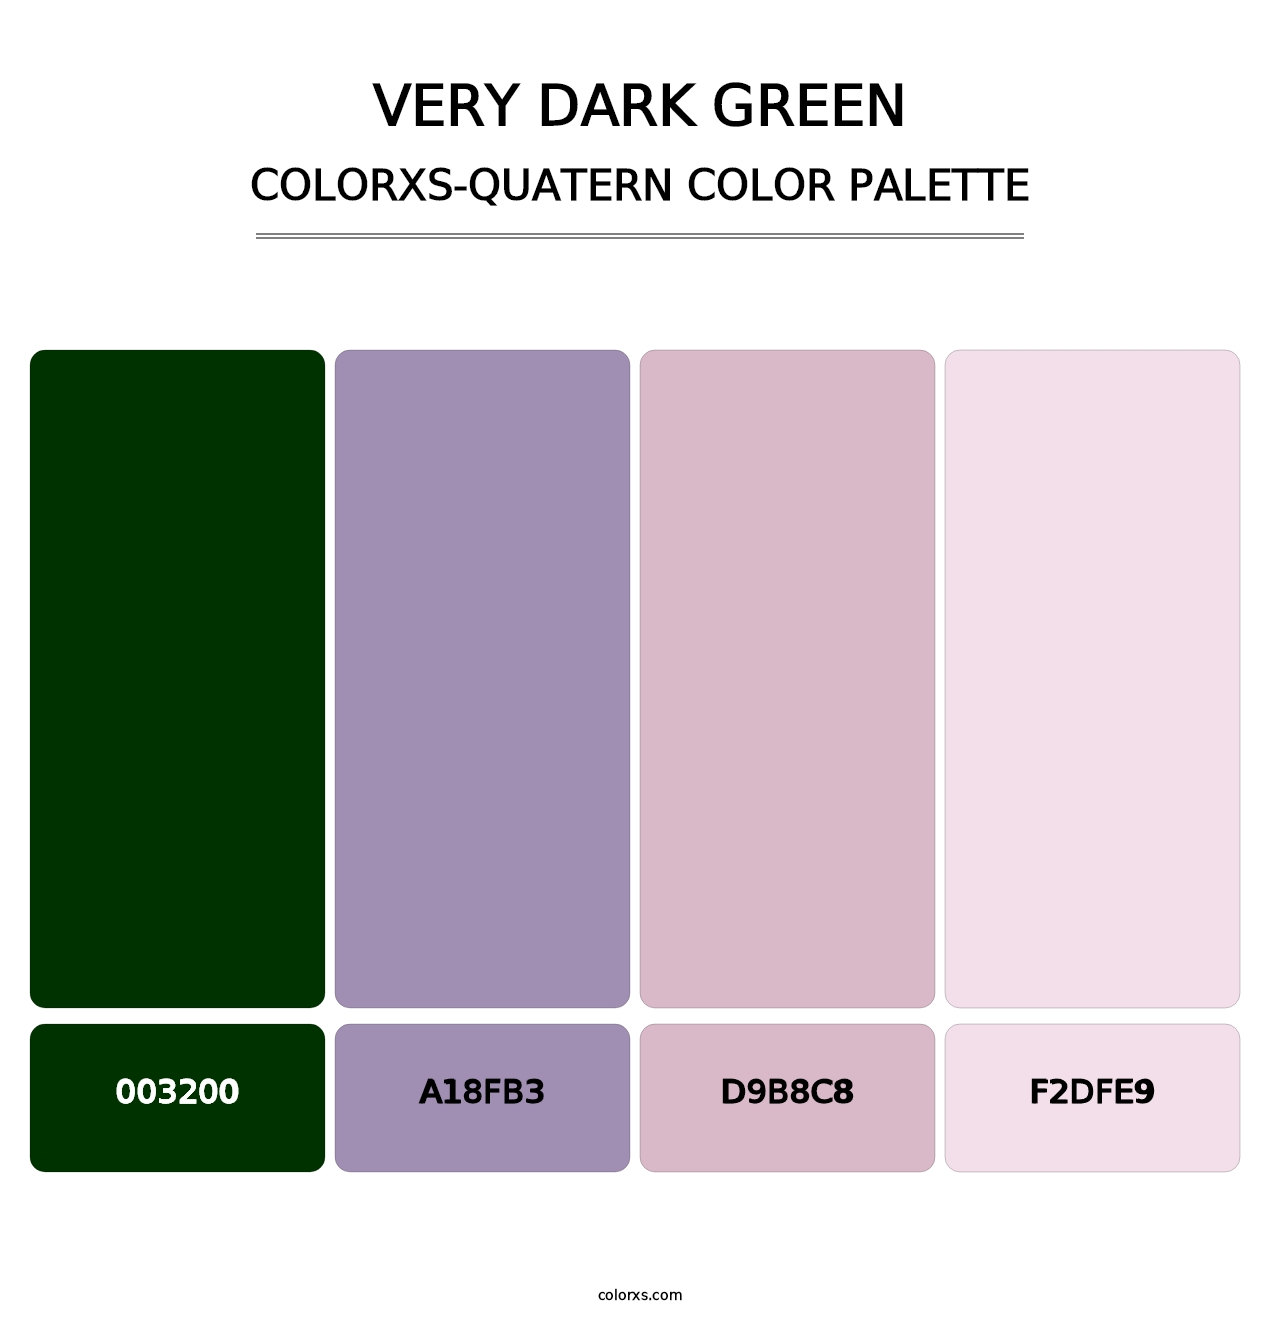 Very Dark Green - Colorxs Quatern Palette